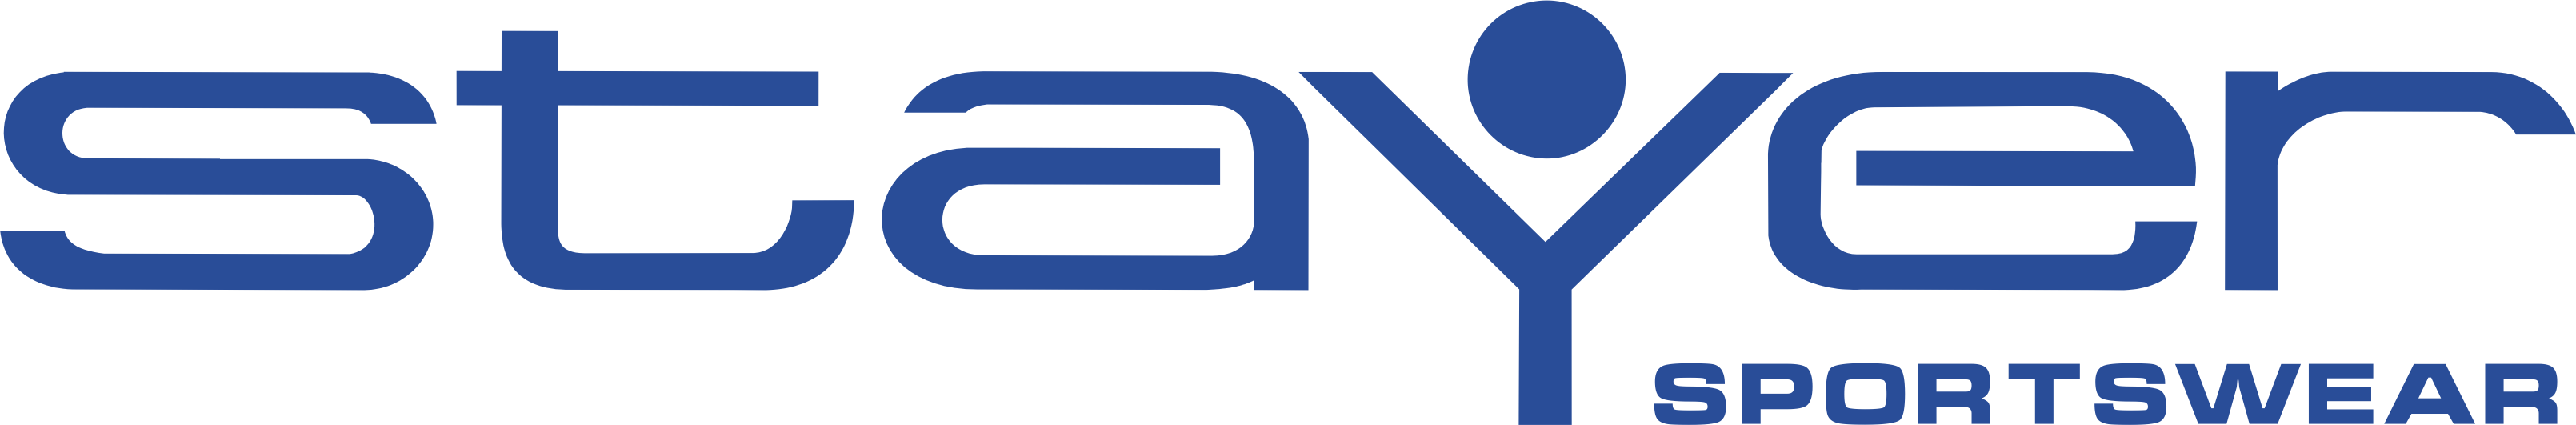 ООО "Спорт-Дизайн" logo